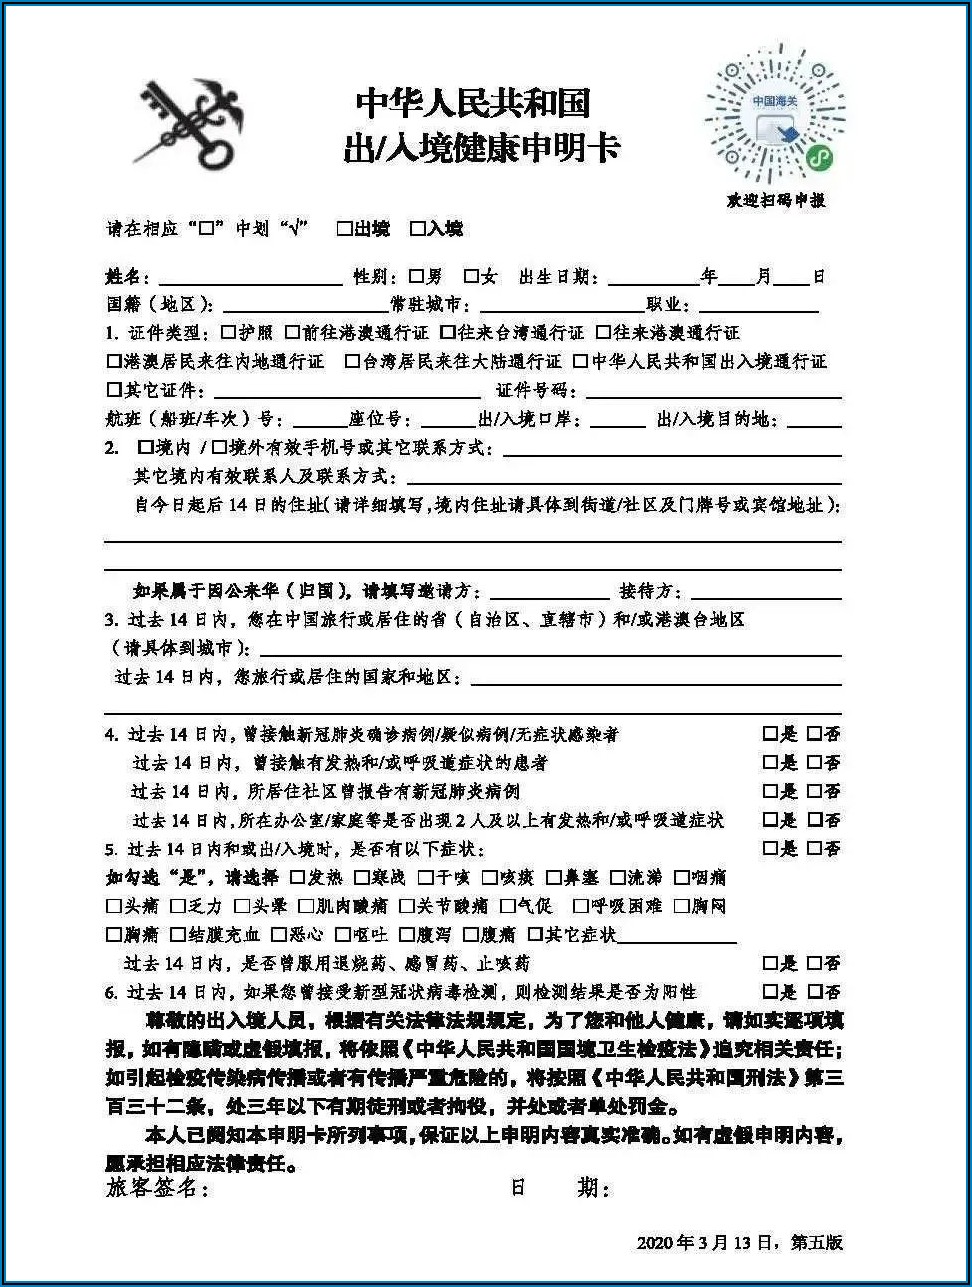 Health Declaration Form For China Visa Application